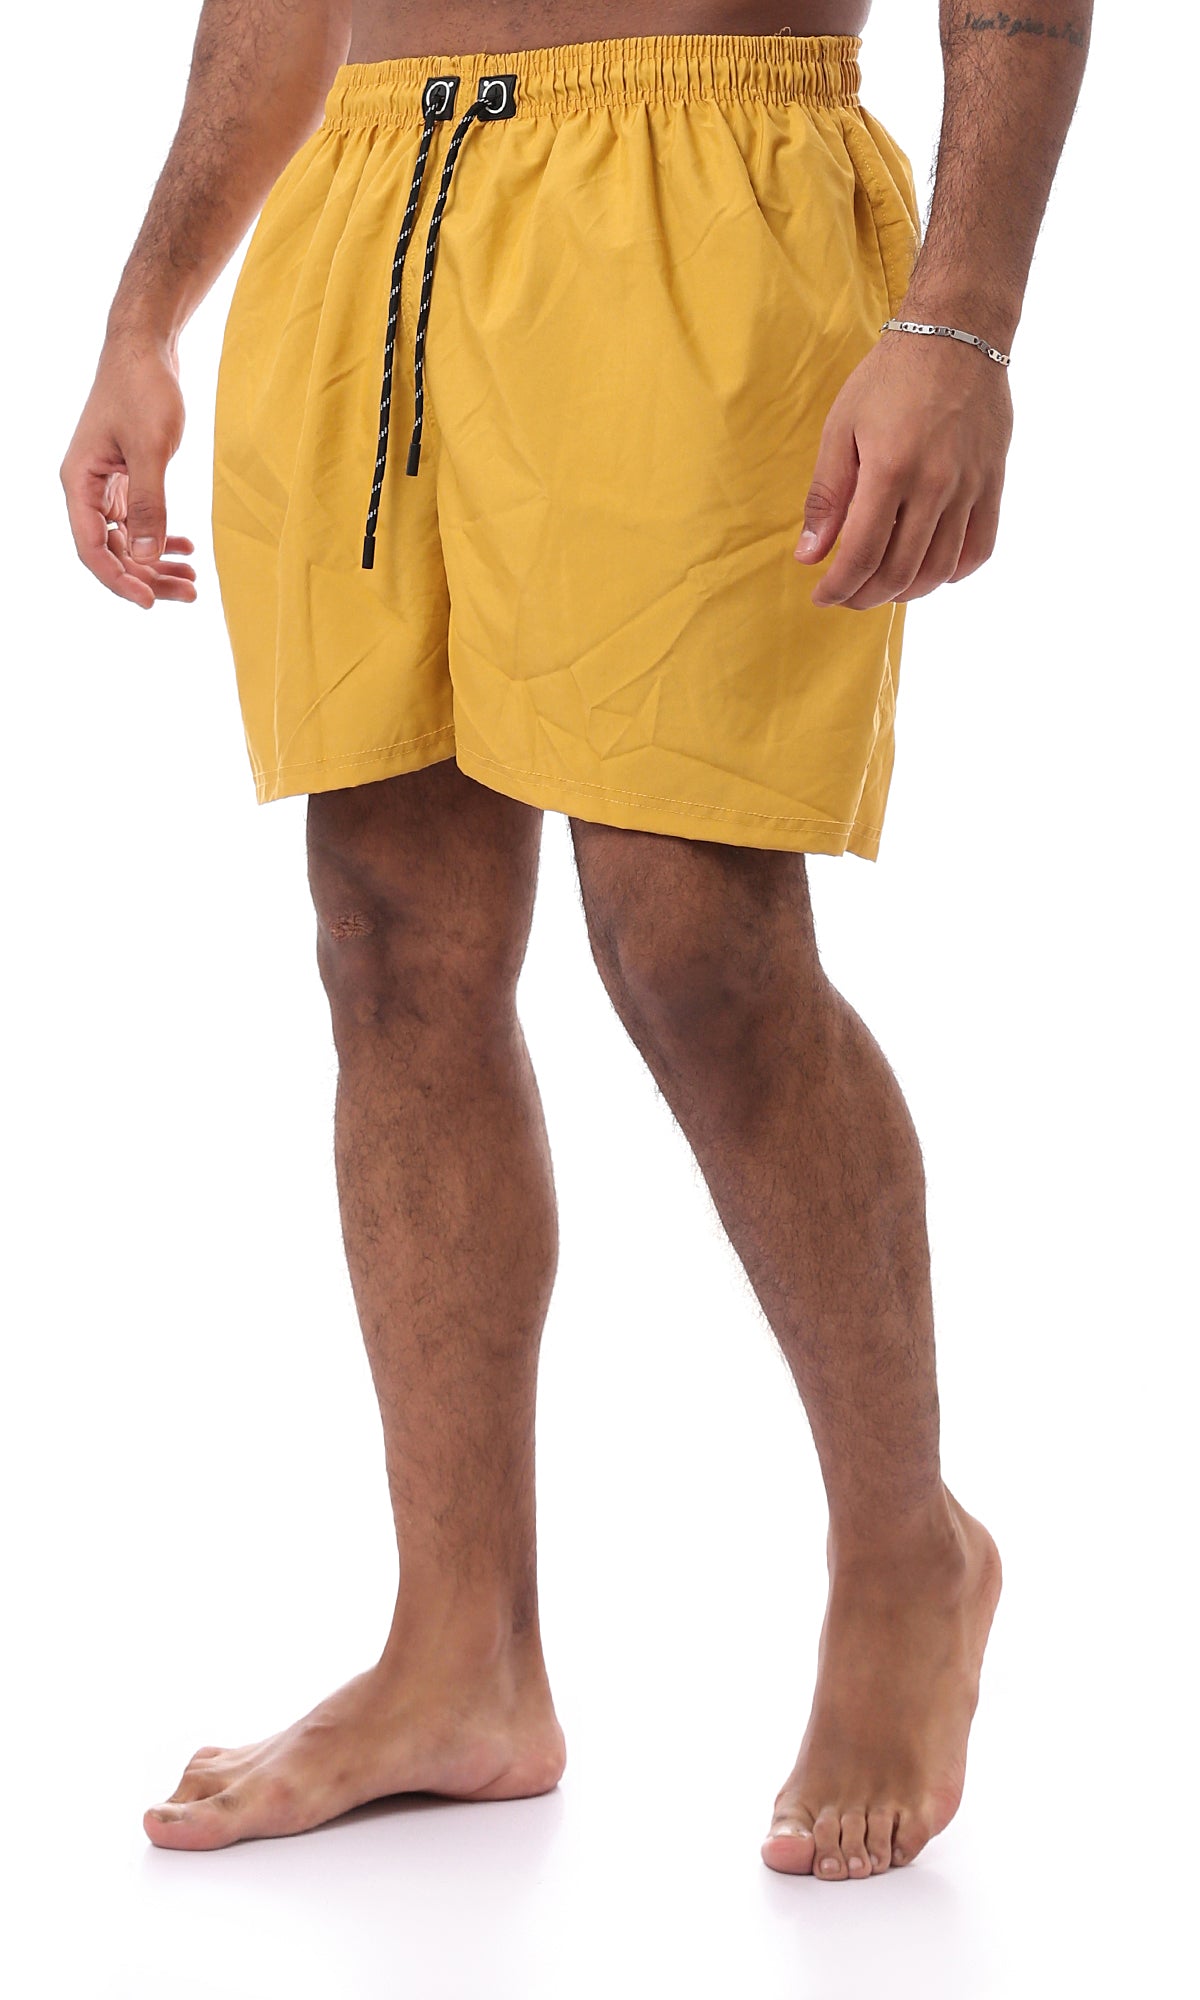 O170438 Solid Mustard Slip On Board Shorts With Drawstrings